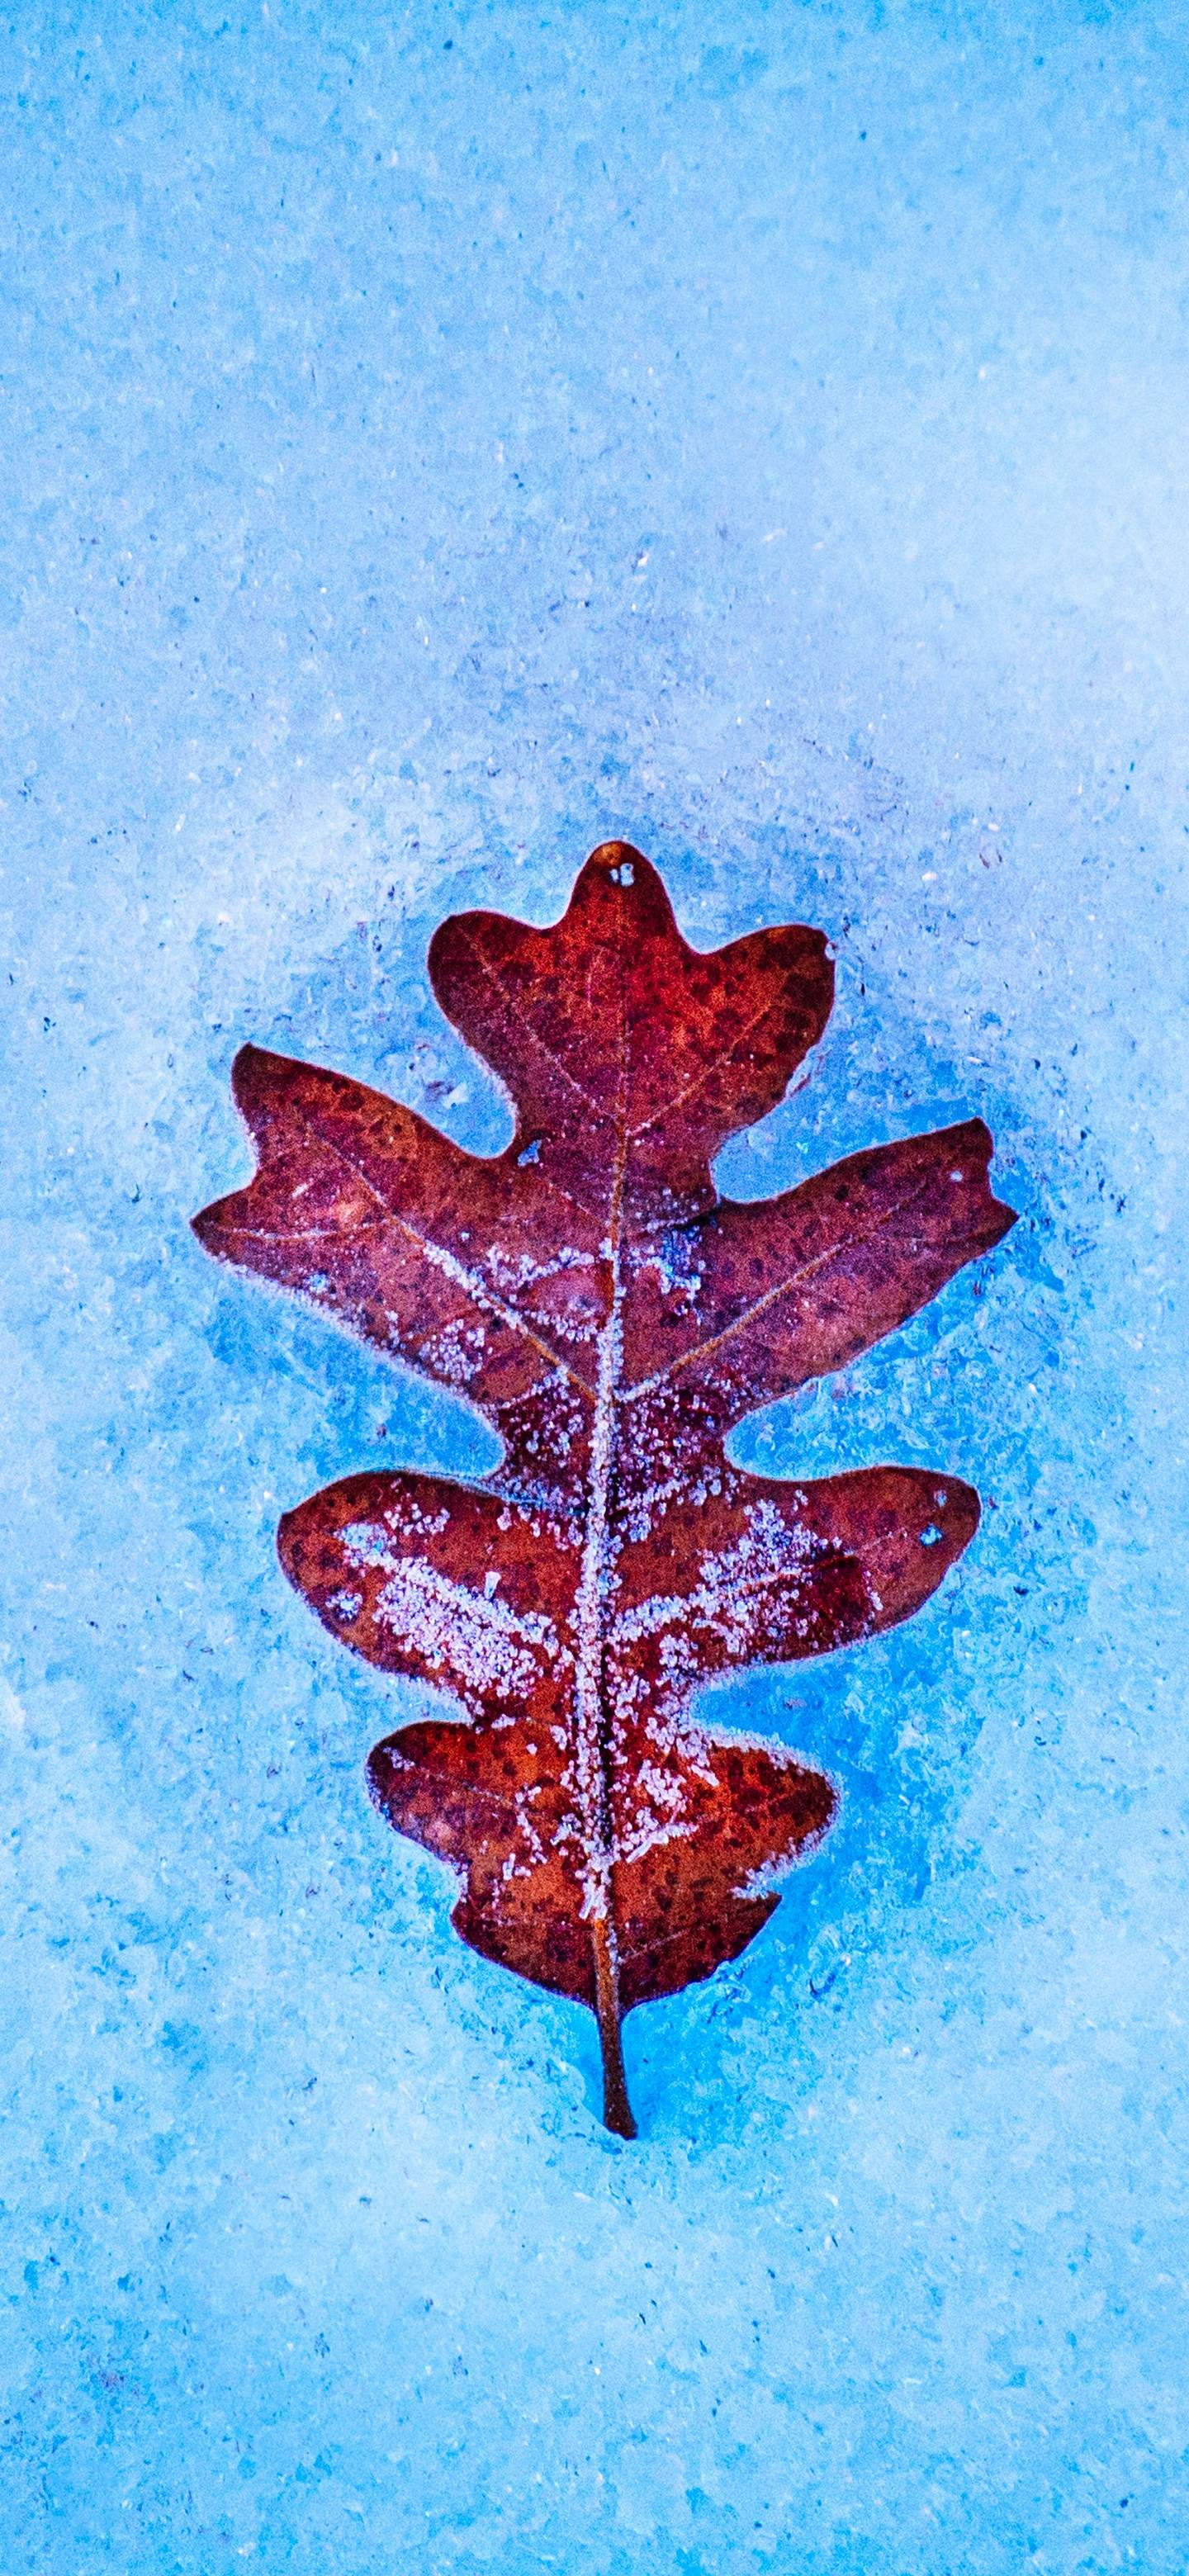 OnePlus 7 Pro Leaf On Snow Wallpaper